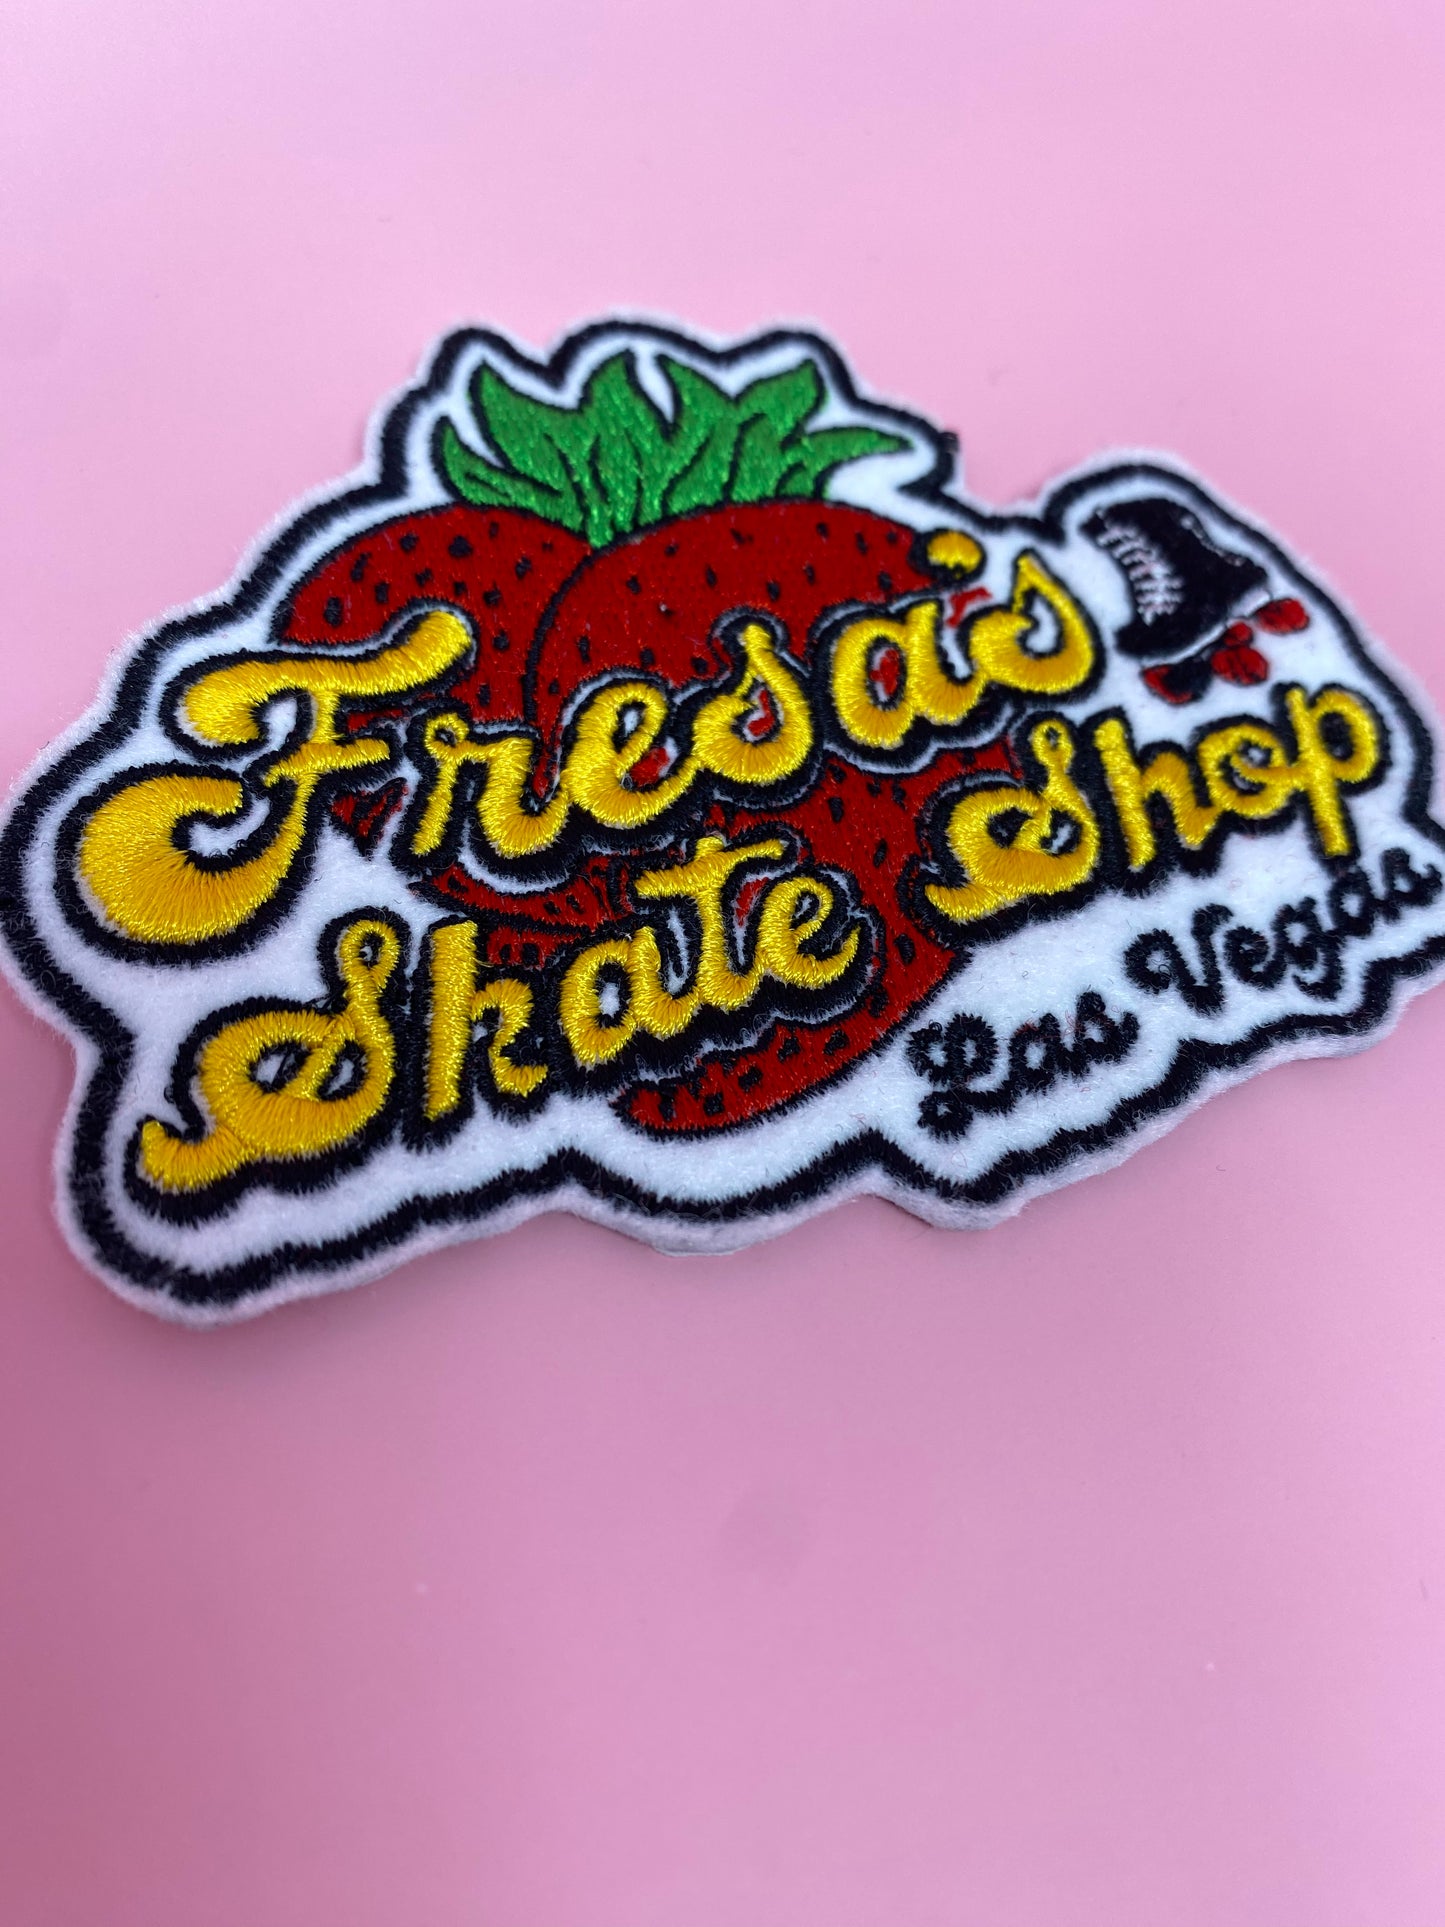 Fresa’s Skate Shop Iron-on Patch